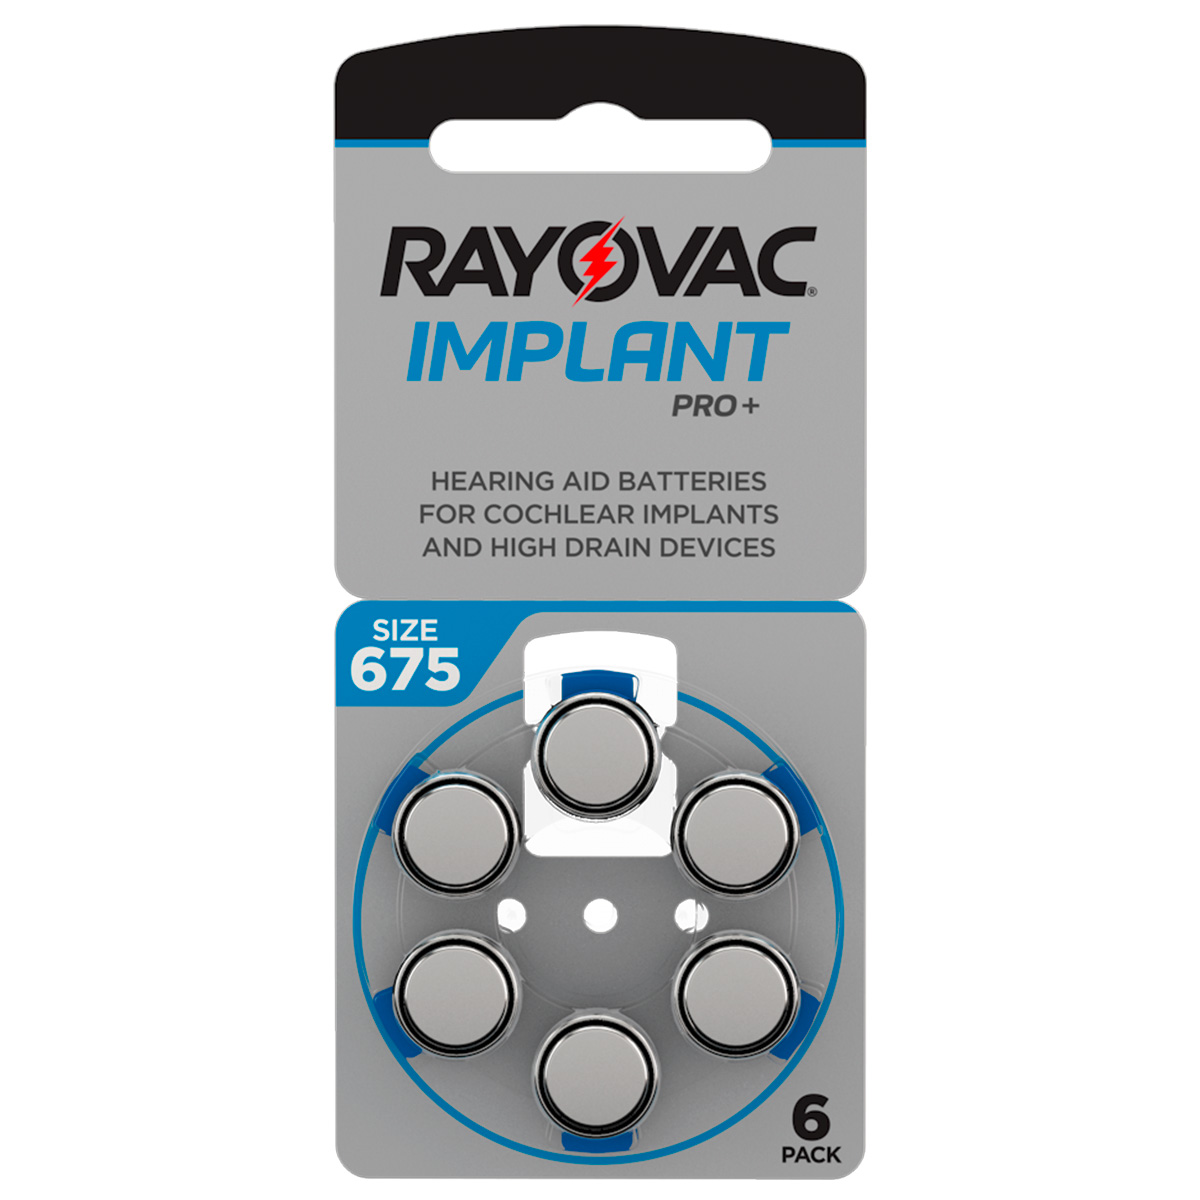 Rayovac Implant Pro+, 6 hoortoestelbatterijen nr. 675 voor cochleaire implantaten, blisterverpakking